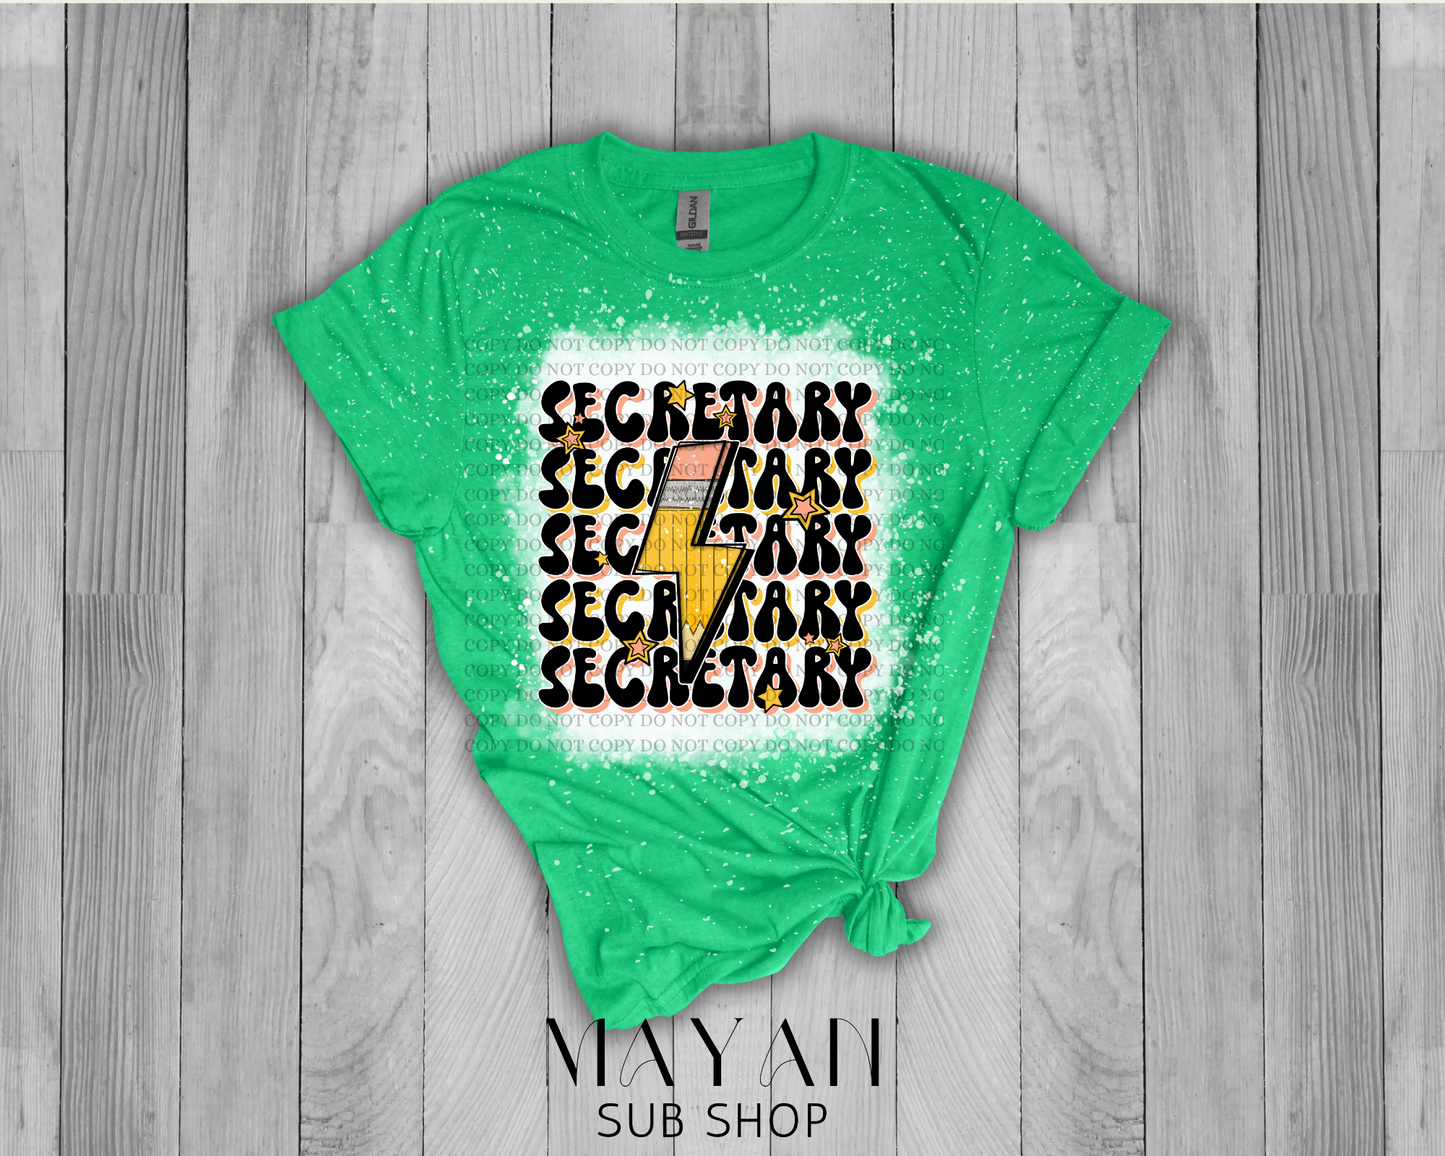 Secretary Retro Bleached Shirt - Mayan Sub Shop